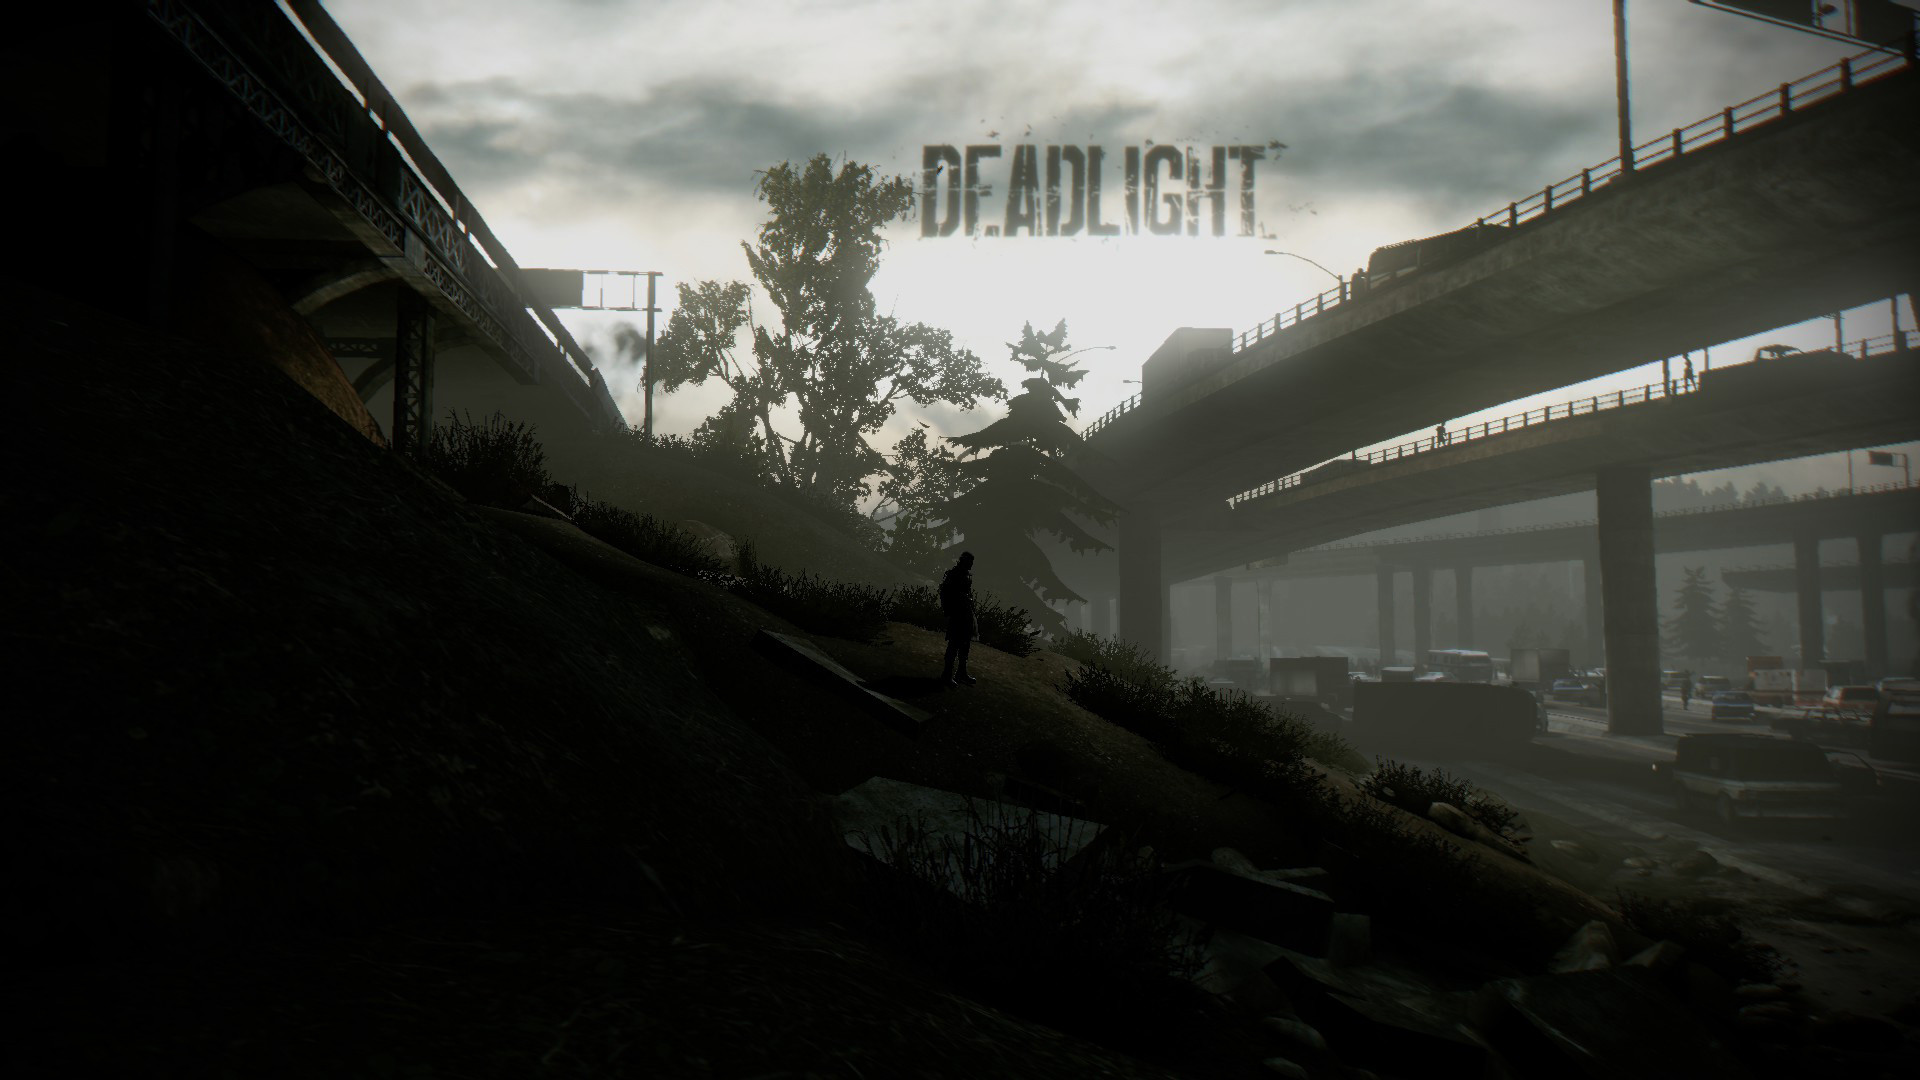 Deadlight Title Screen I